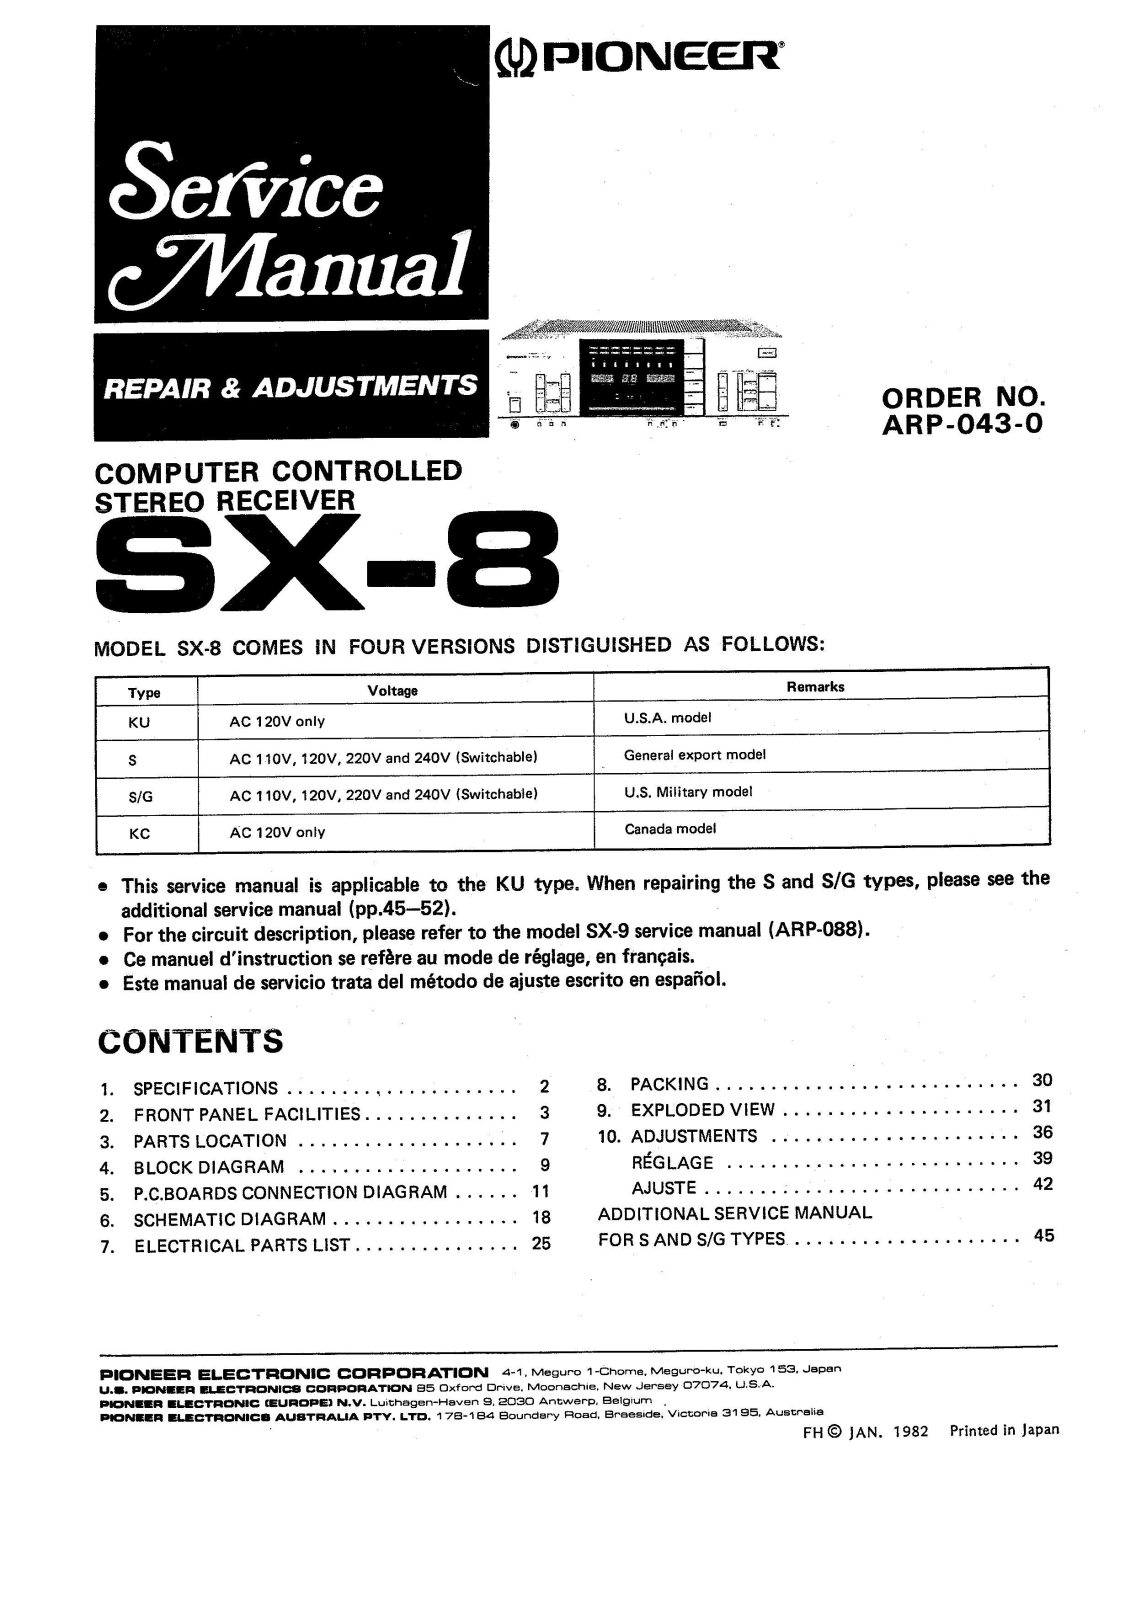 Pioneer SX-8 Service manual